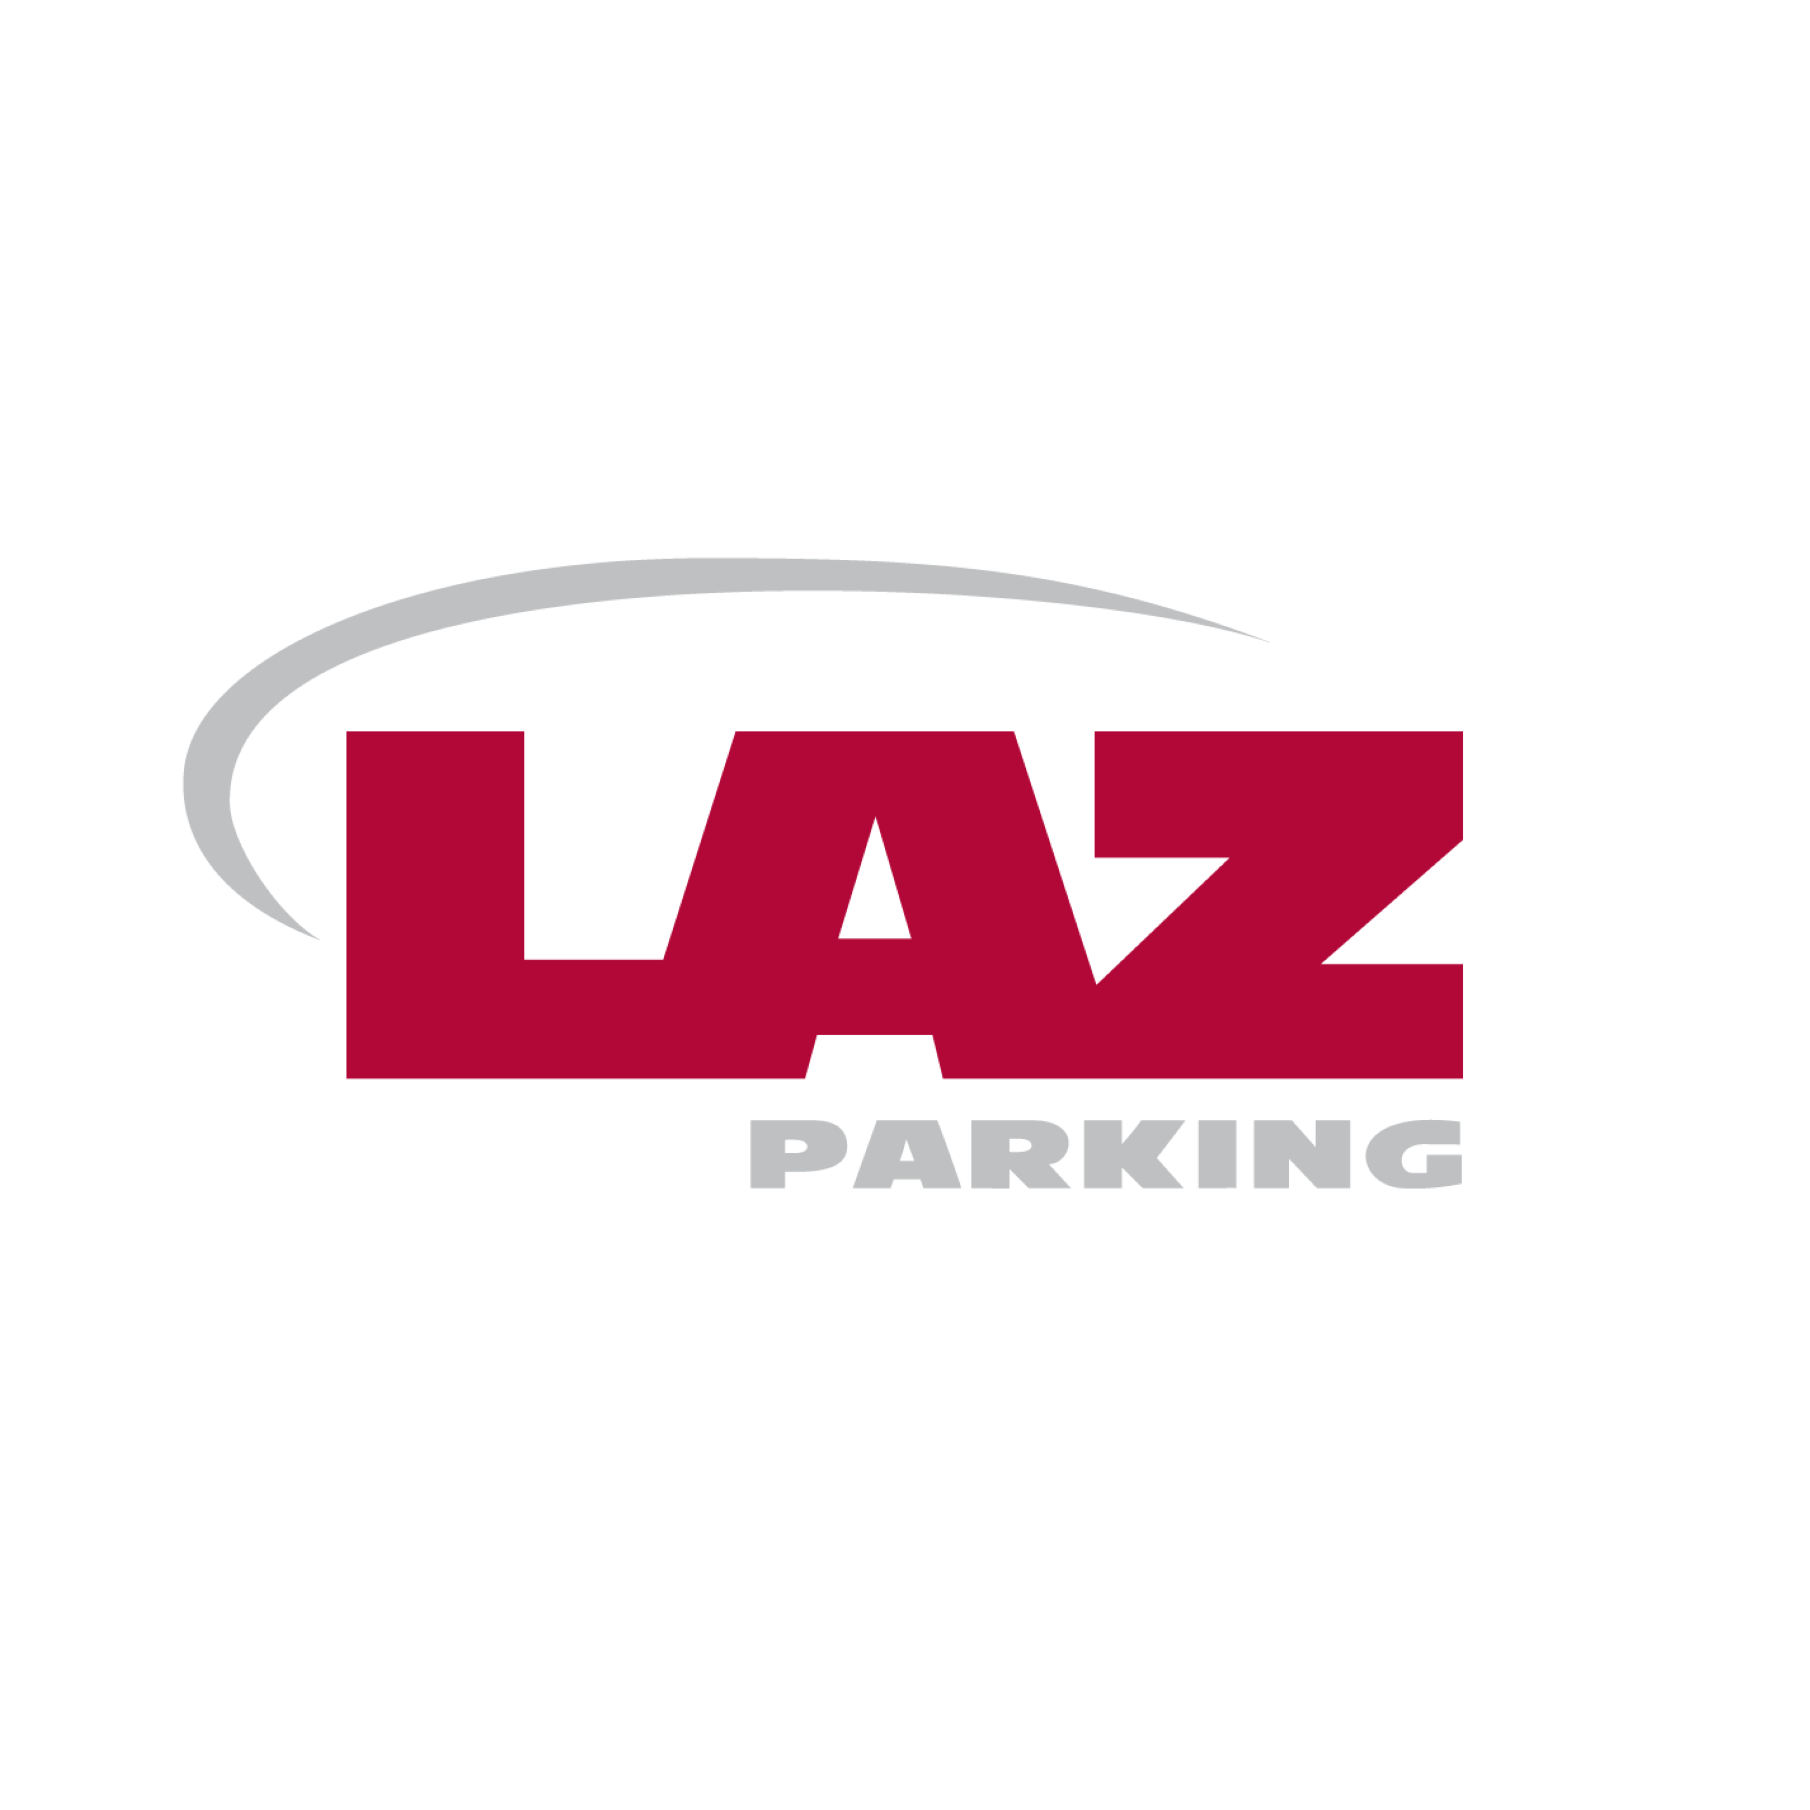 LAZ Parking - Cincinnati, OH 45202 - (513)316-3713 | ShowMeLocal.com